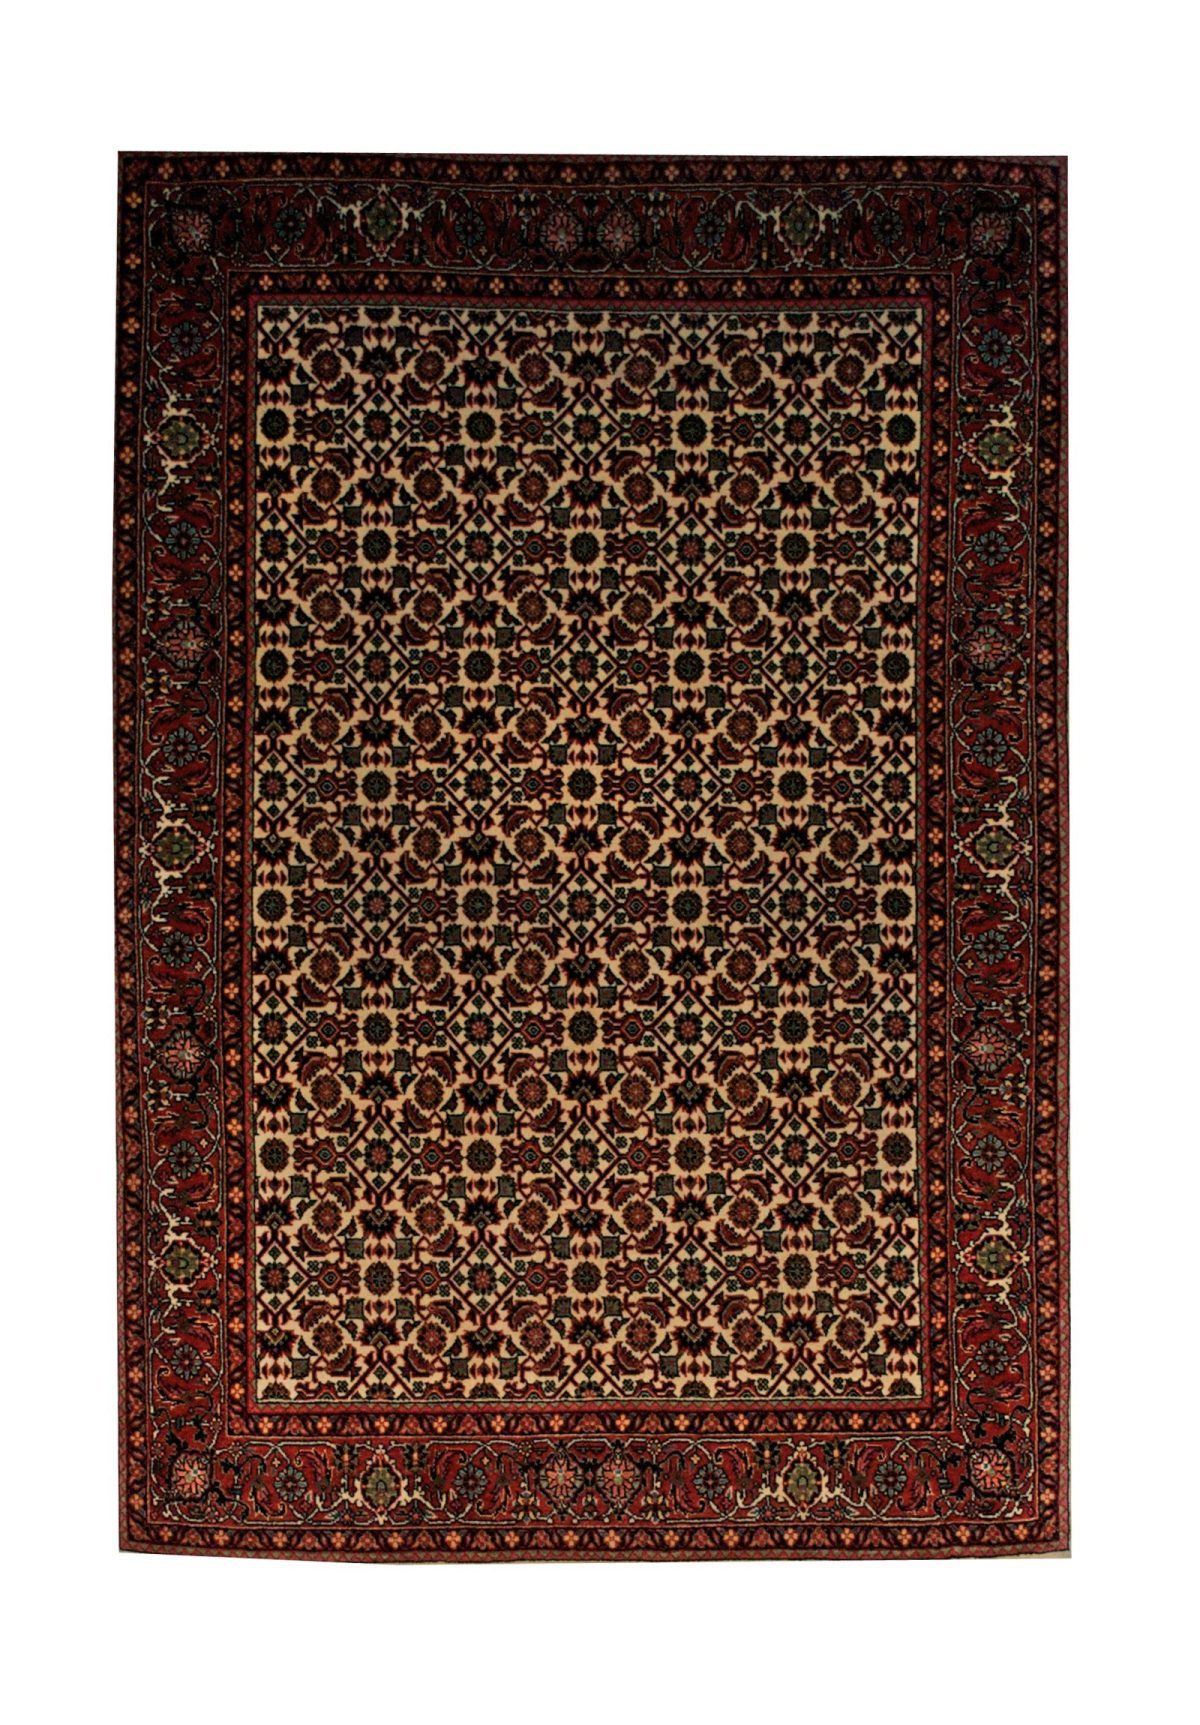 Persian Bijar 3' 3" x 4' 8" Handmade Area Rug - Shabahang Royal Carpet